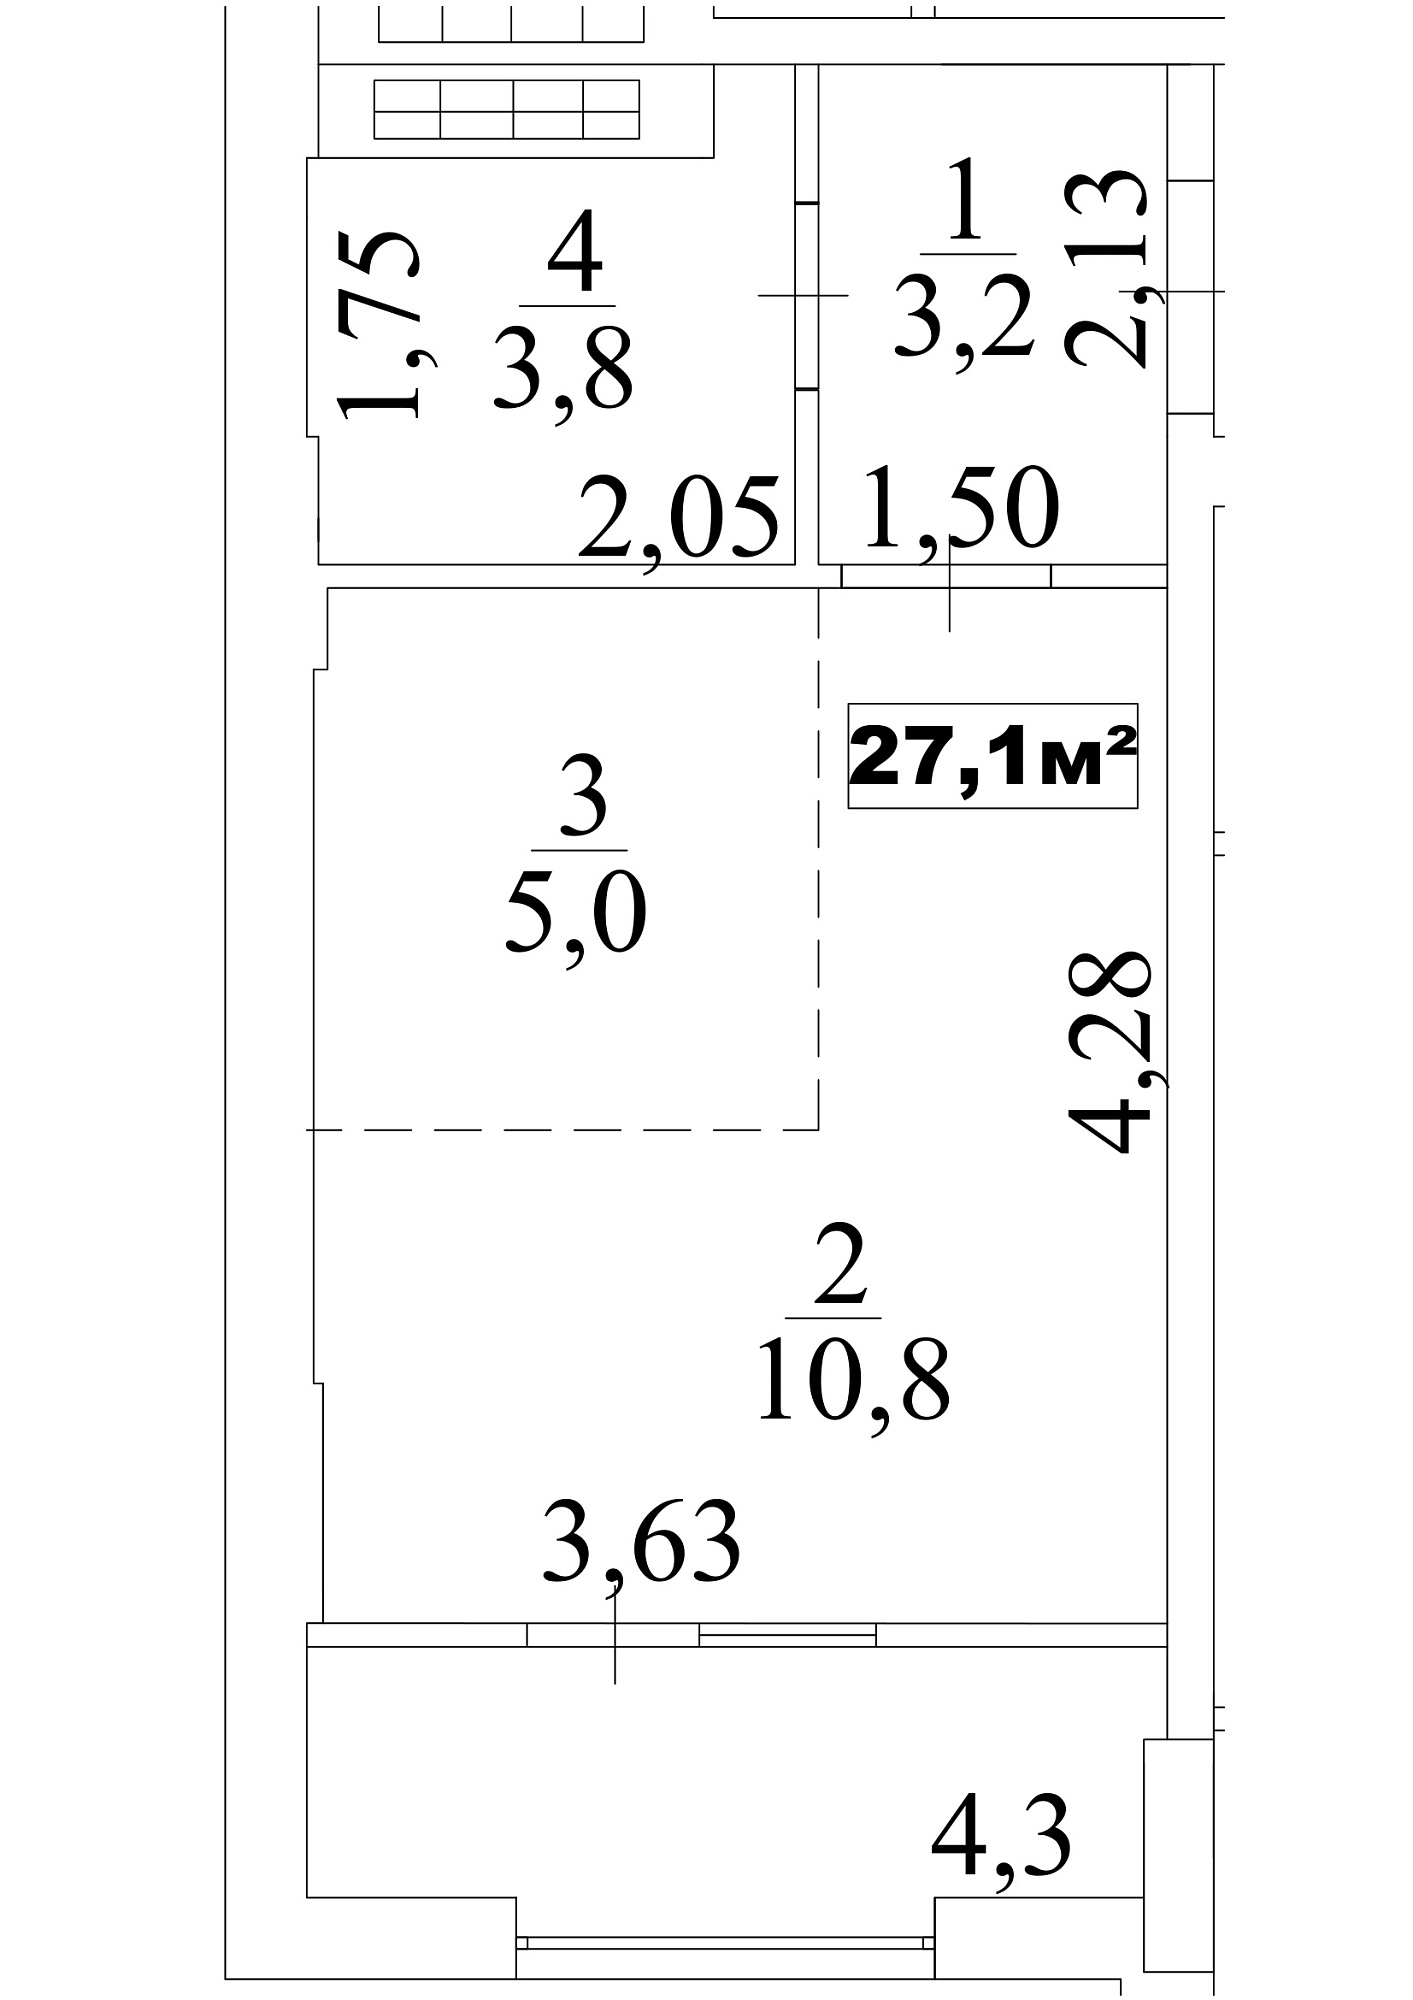 Planning Smart flats area 27.1m2, AB-10-06/0048а.